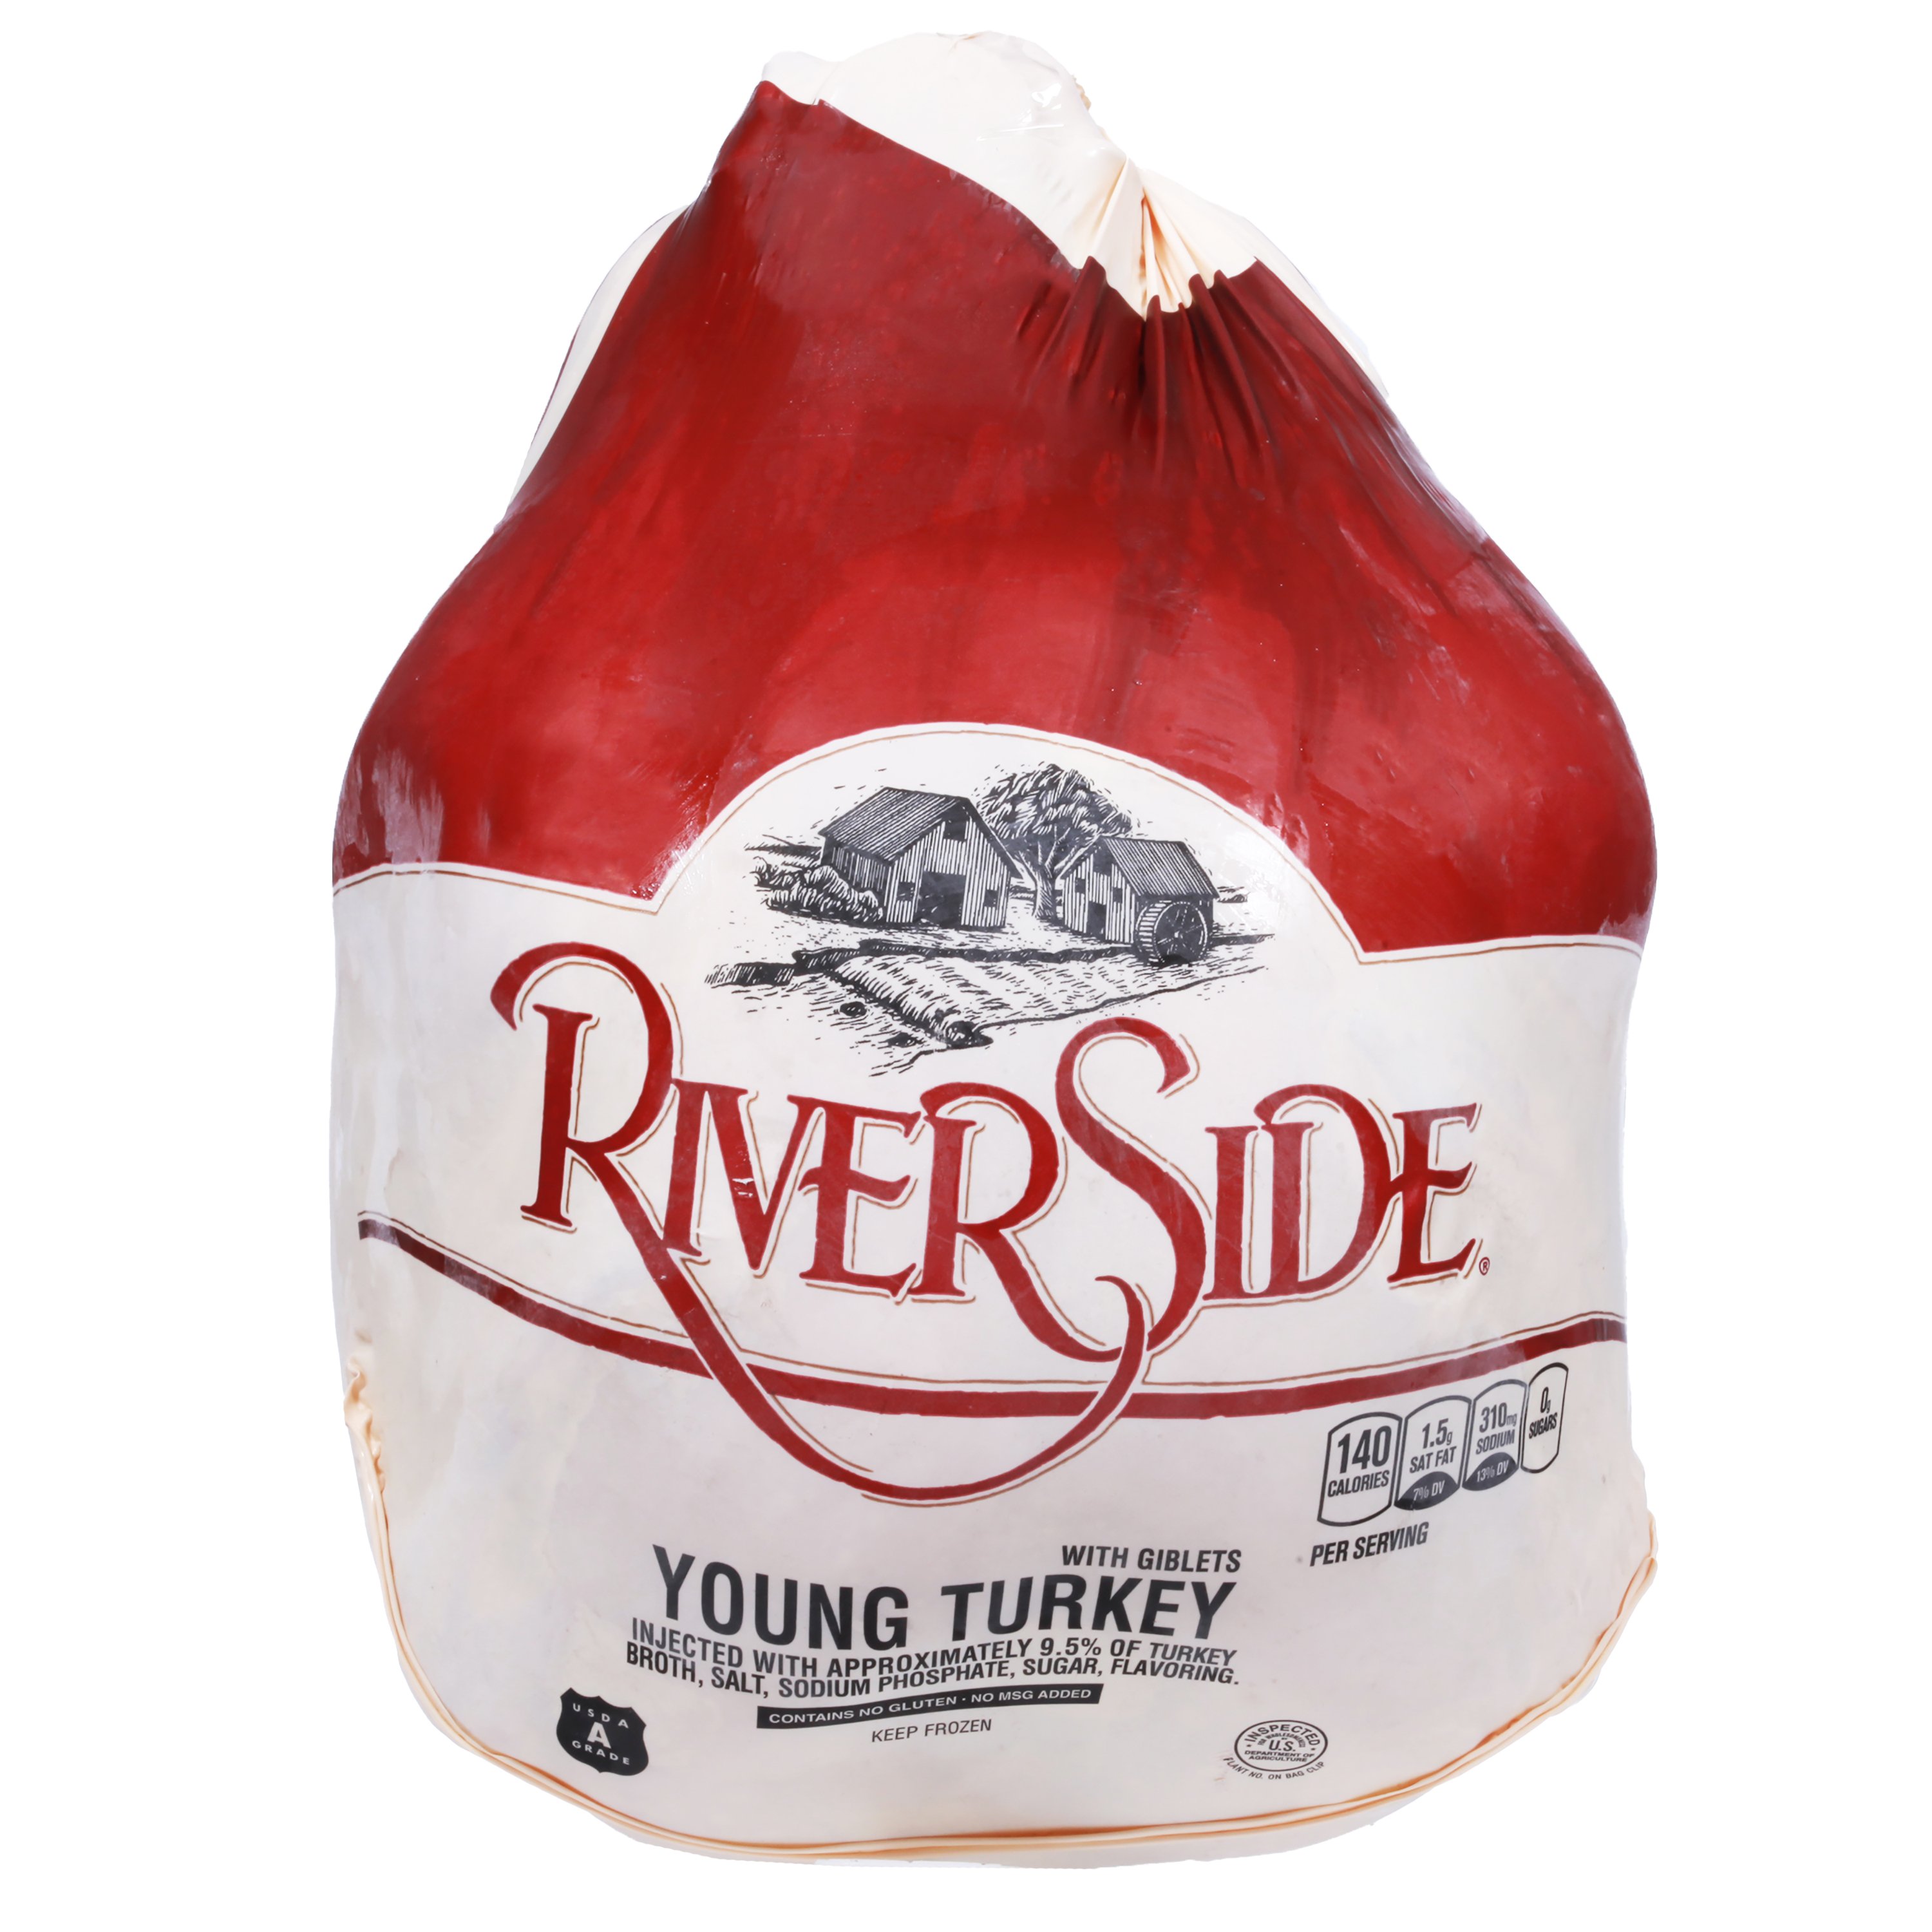 Riverside Frozen Whole Young Turkey, 8 - 12 lbs